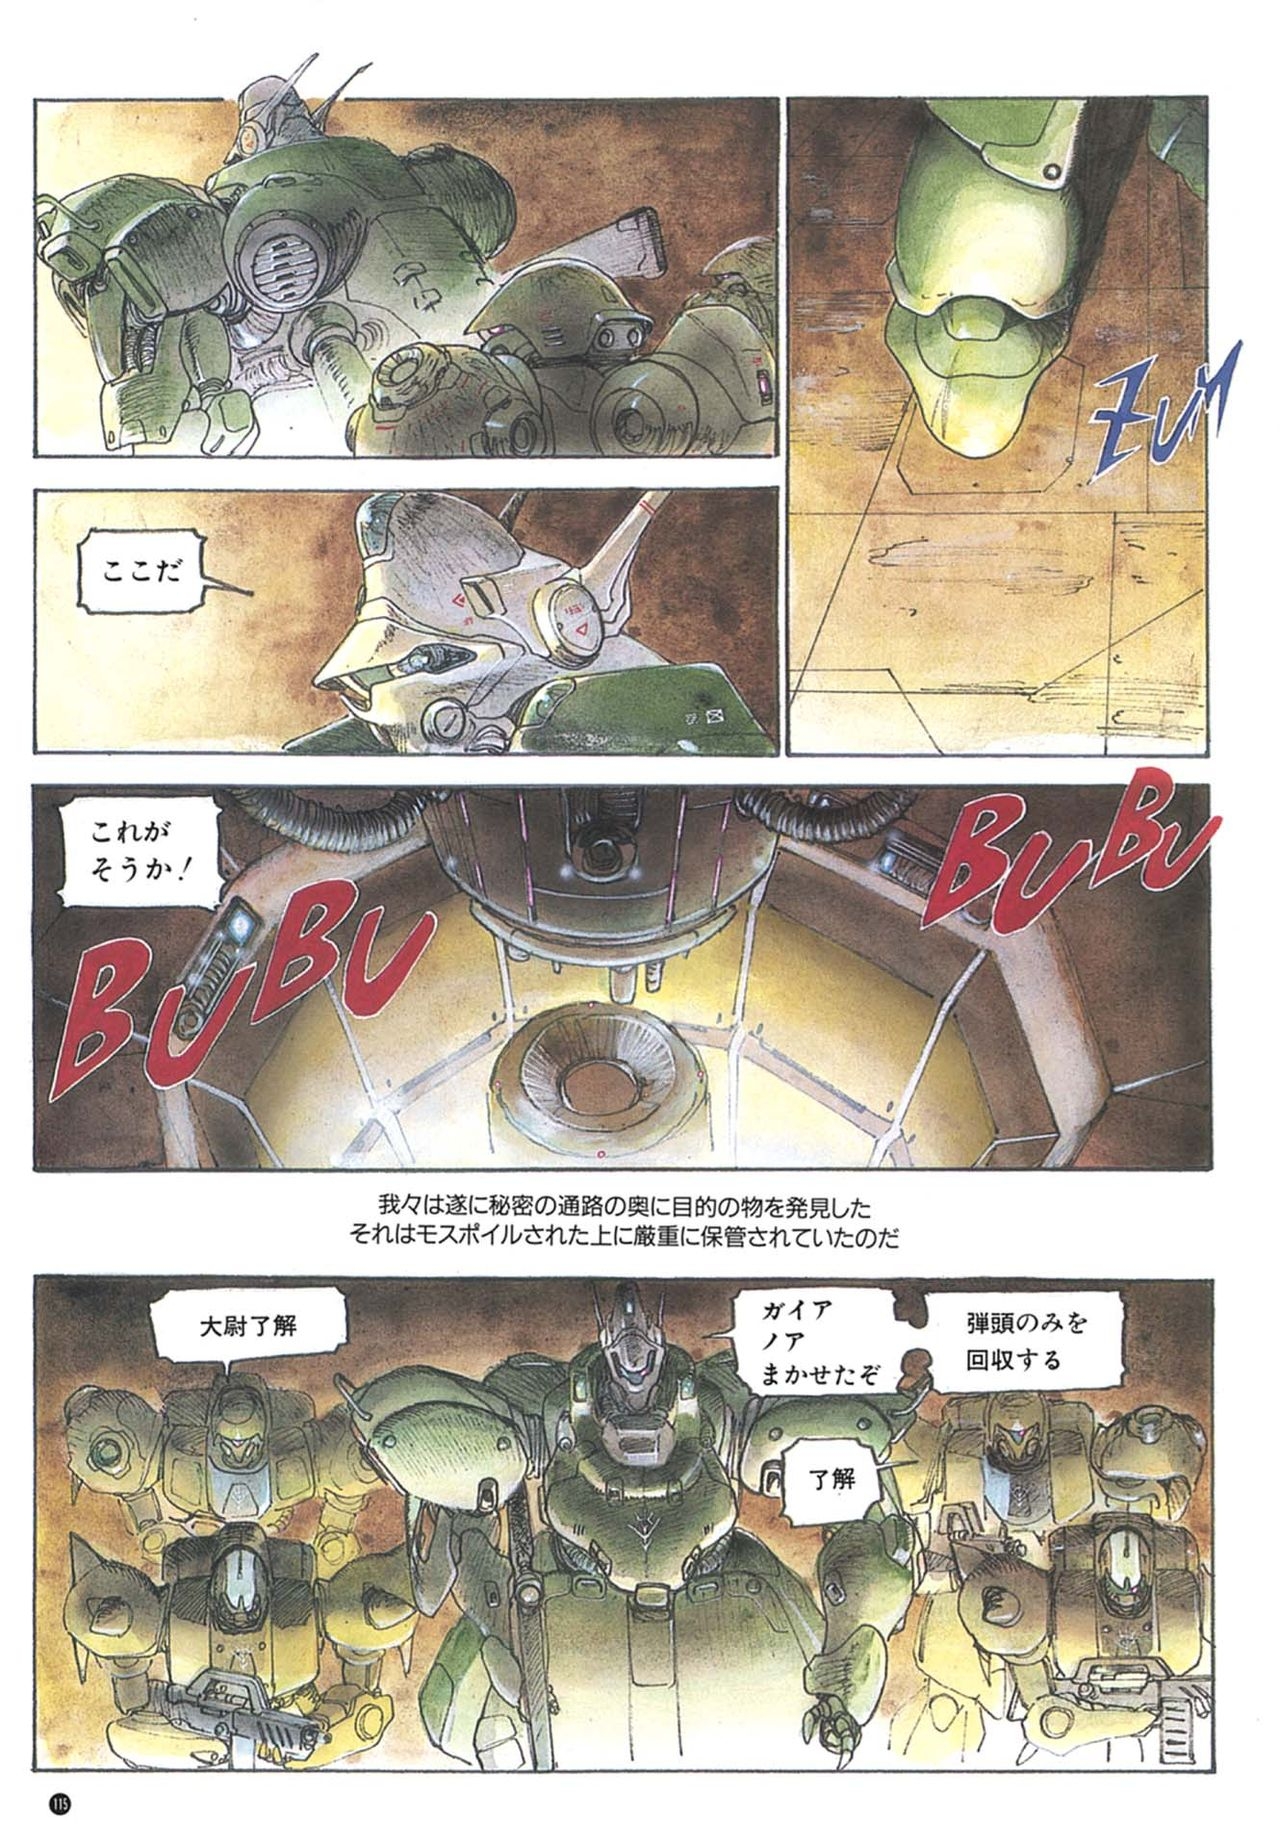 [Kazuhisa Kondo] Kazuhisa Kondo 2D & 3D Works - Go Ahead - From Mobile Suit Gundam to Original Mechanism 114